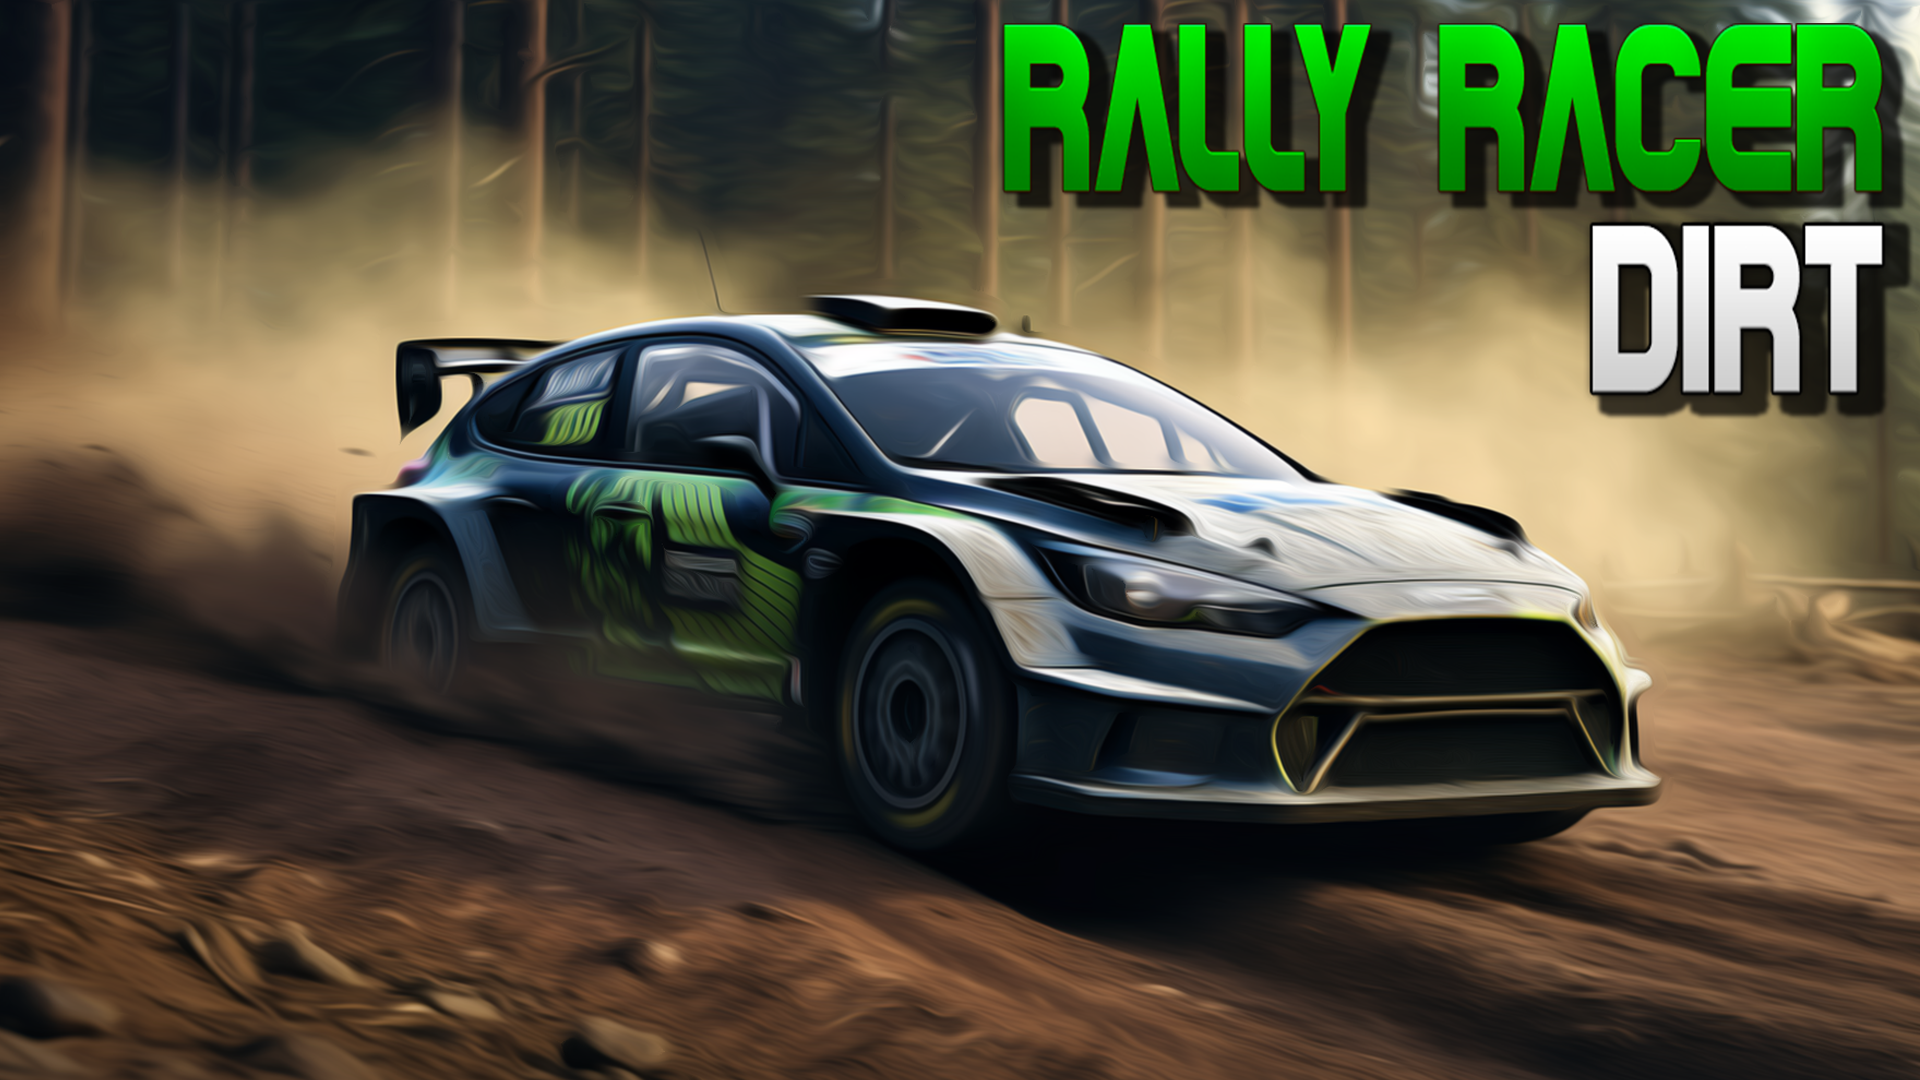 Rally Racer Dirt Game Image